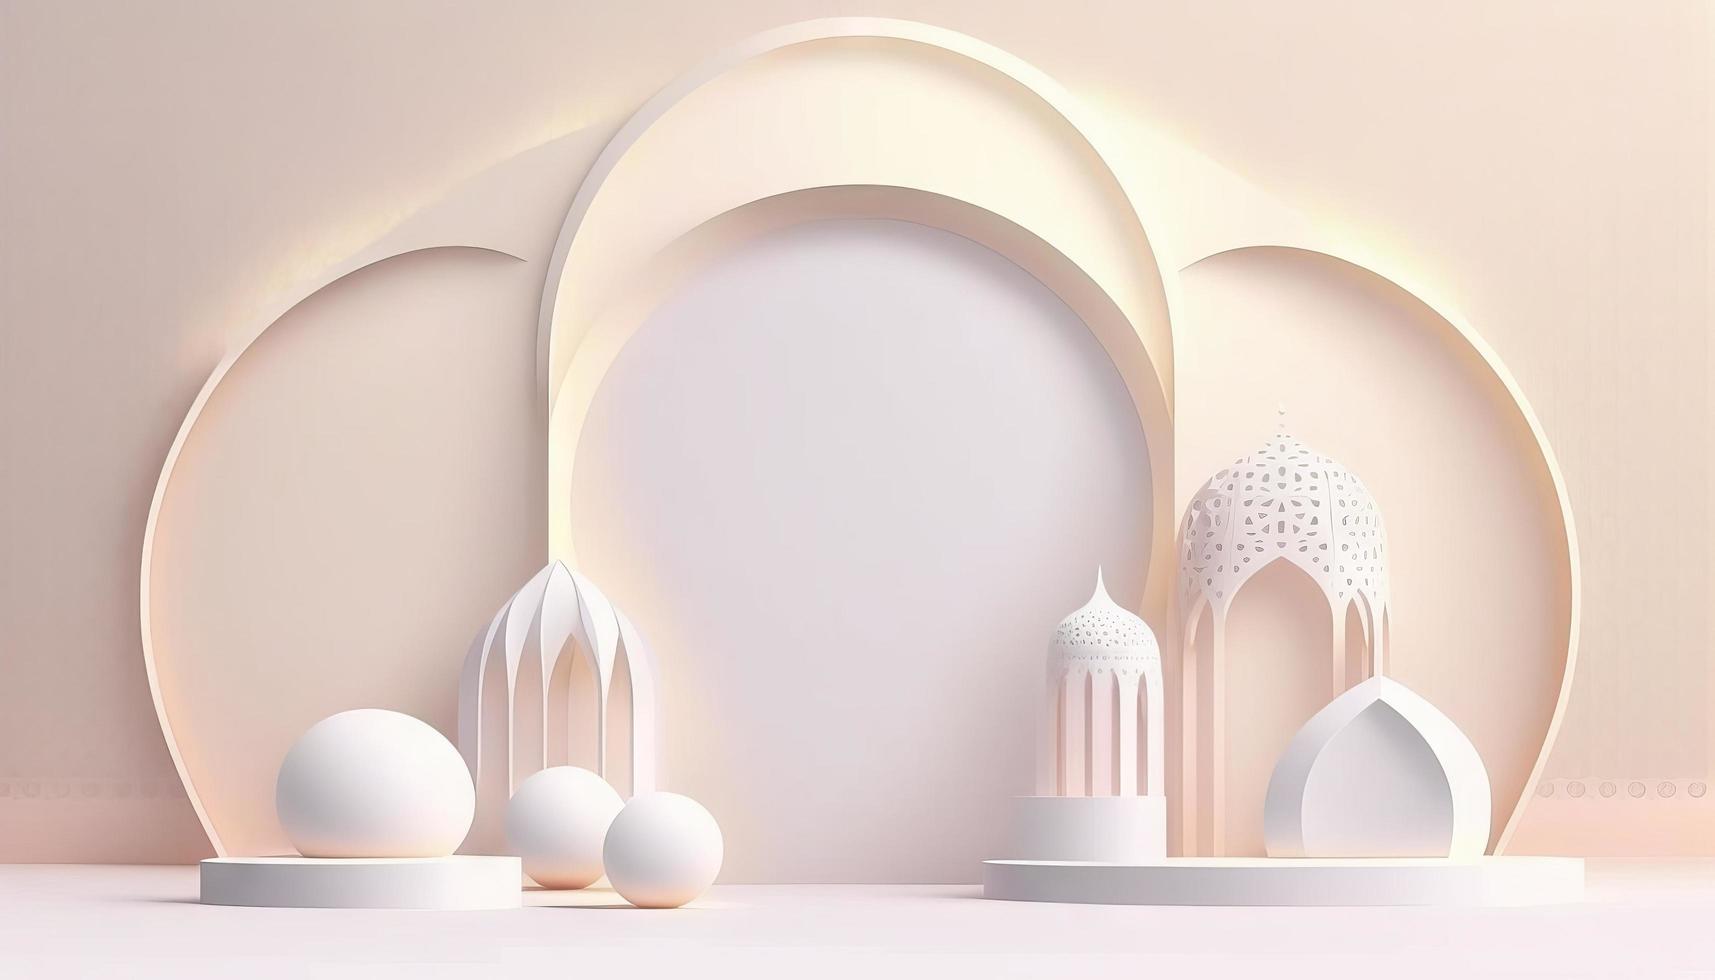 bianca morbido pastello podio islamico sfondo. Ramadhan ornamento su bianca morbido tappeto sfondo. moderno astratto design modello foto